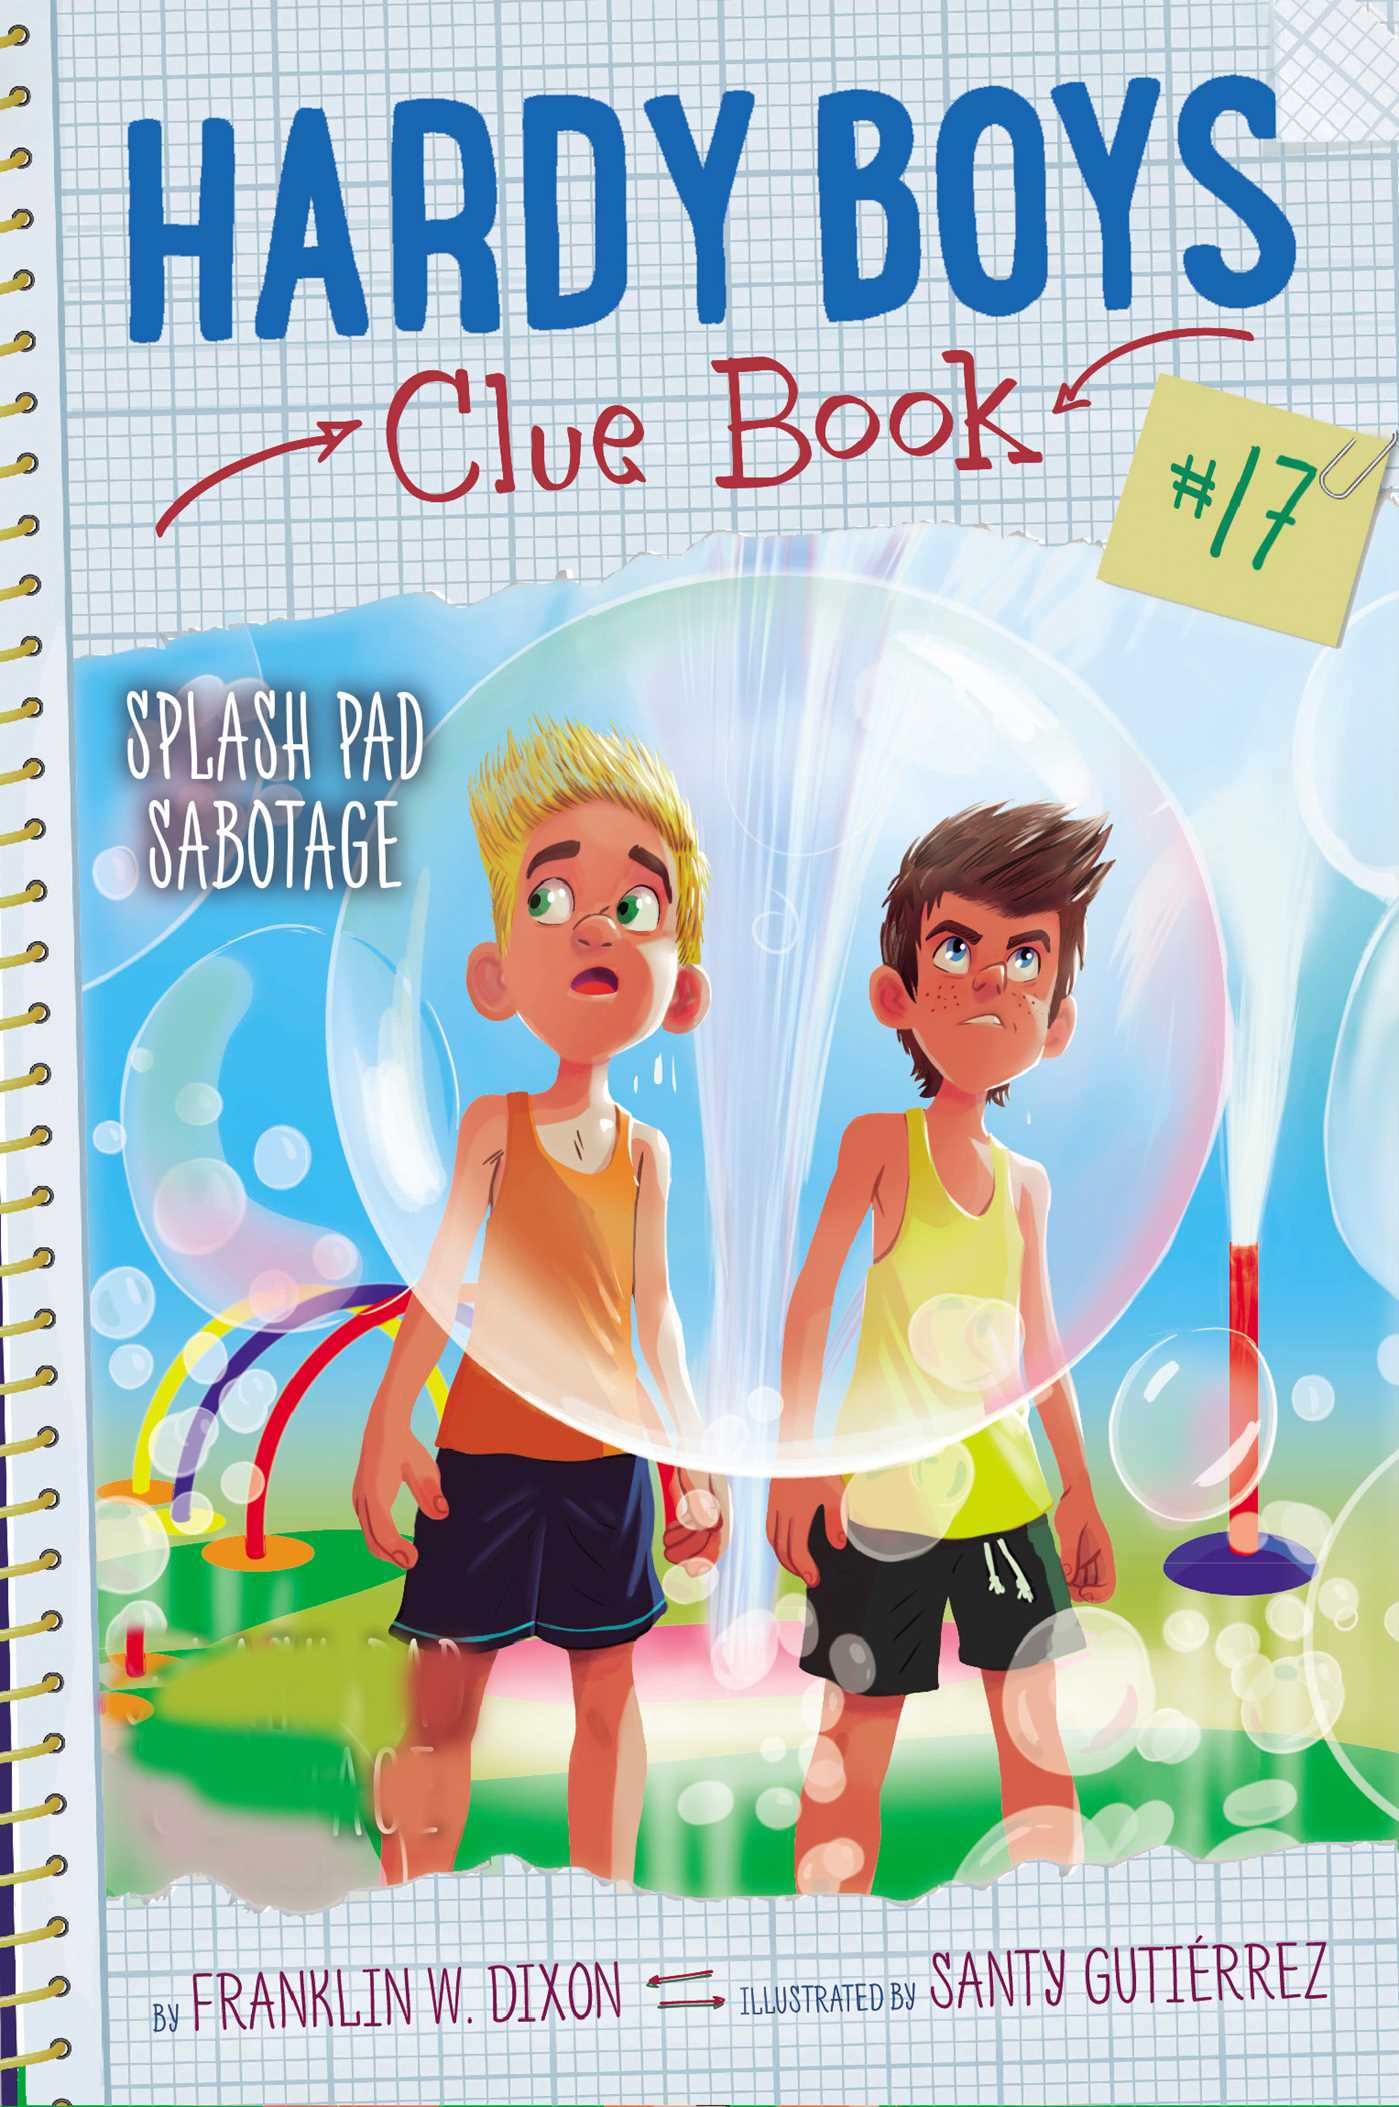 Hardy Boys Clue Book #17 Splash Pad Sabotage ~ Cover Art, Synopsis, Details